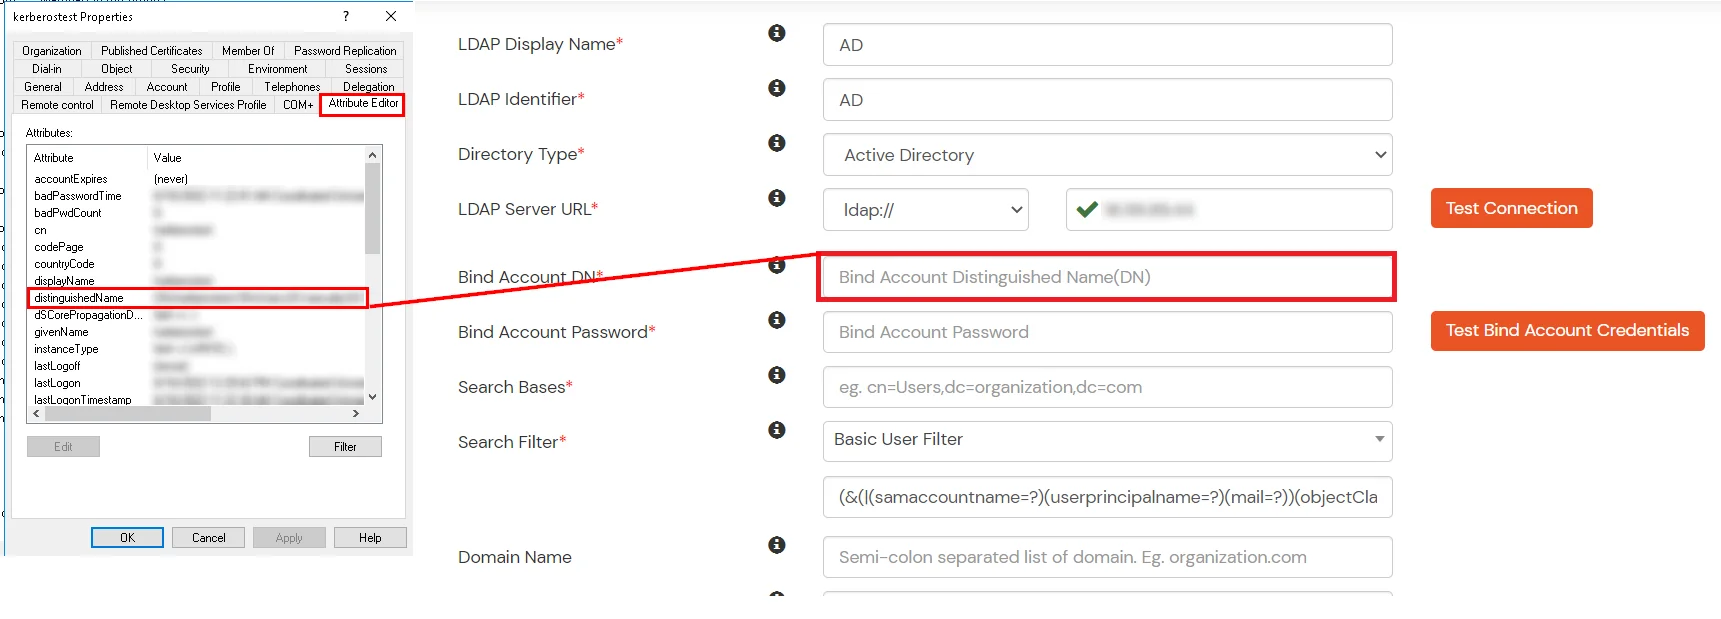 QlikView MFA: Configure user bind account domain name